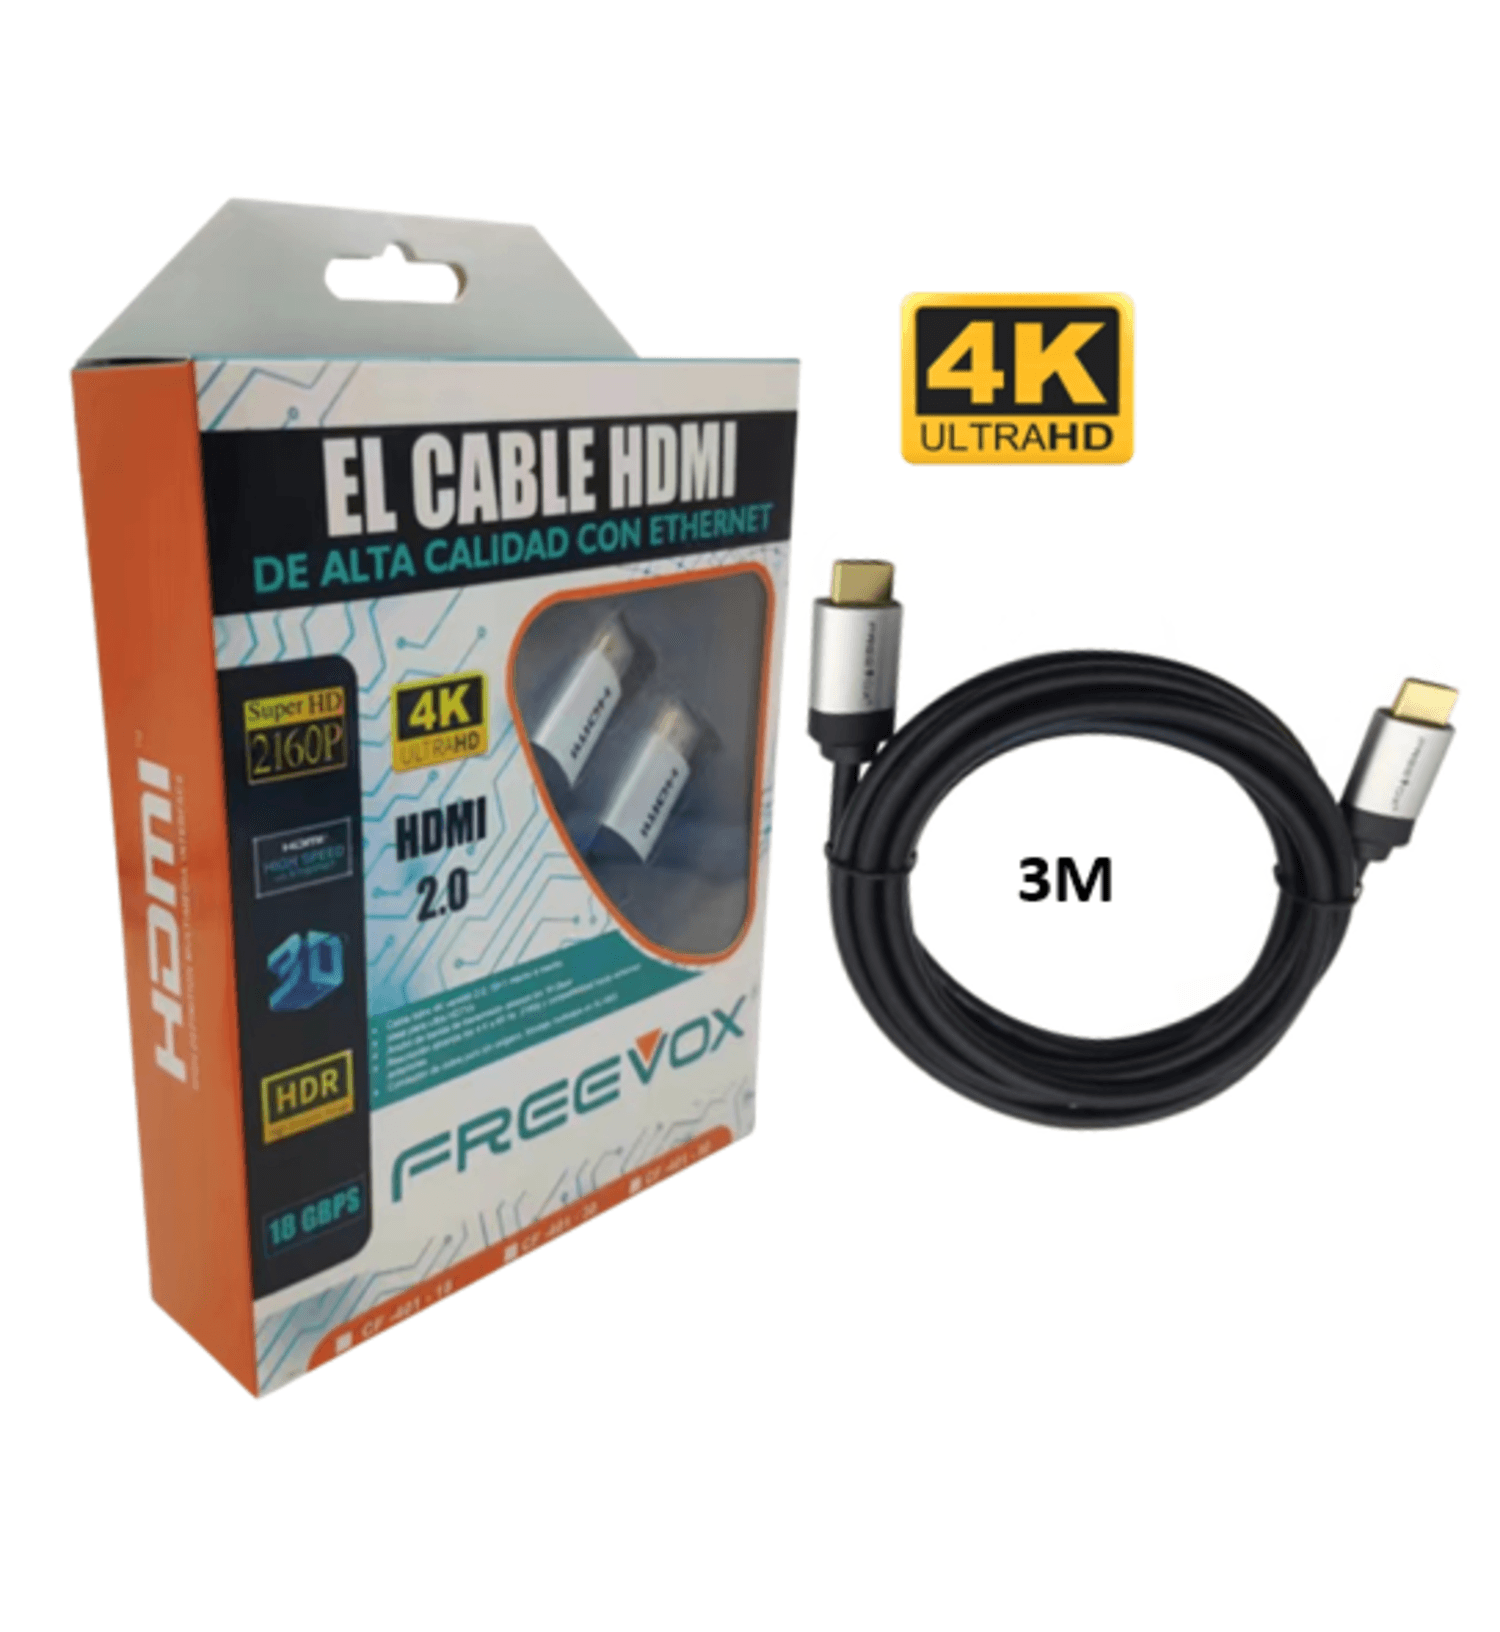 CABLE HDMI FREEVOX 4K V2.0 – 3m con Ethernet